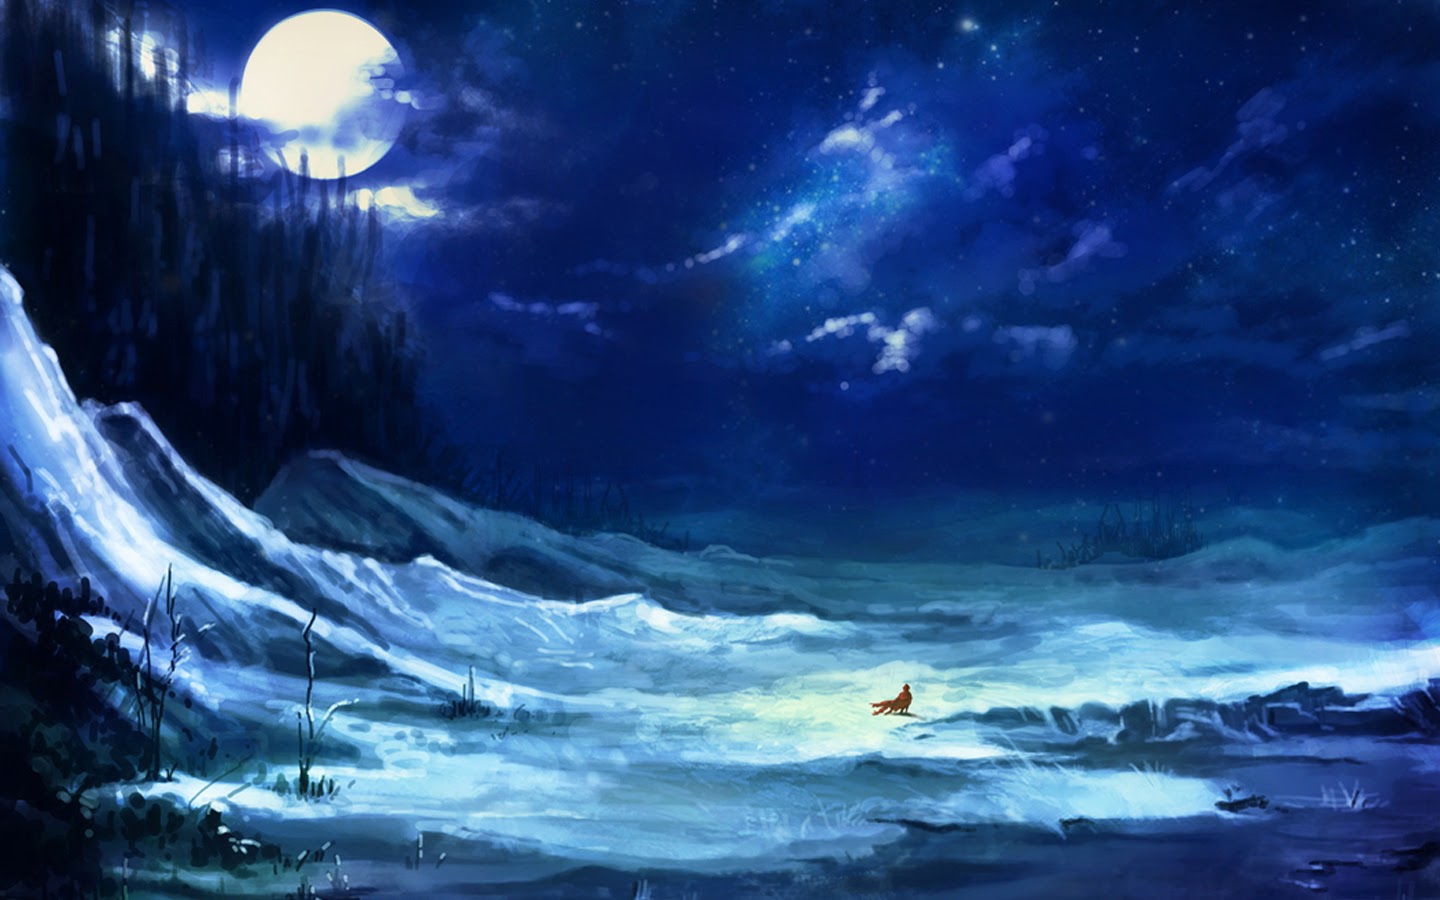 Beautiful anime girl depicting half moon stars and trees at night 2K  wallpaper download